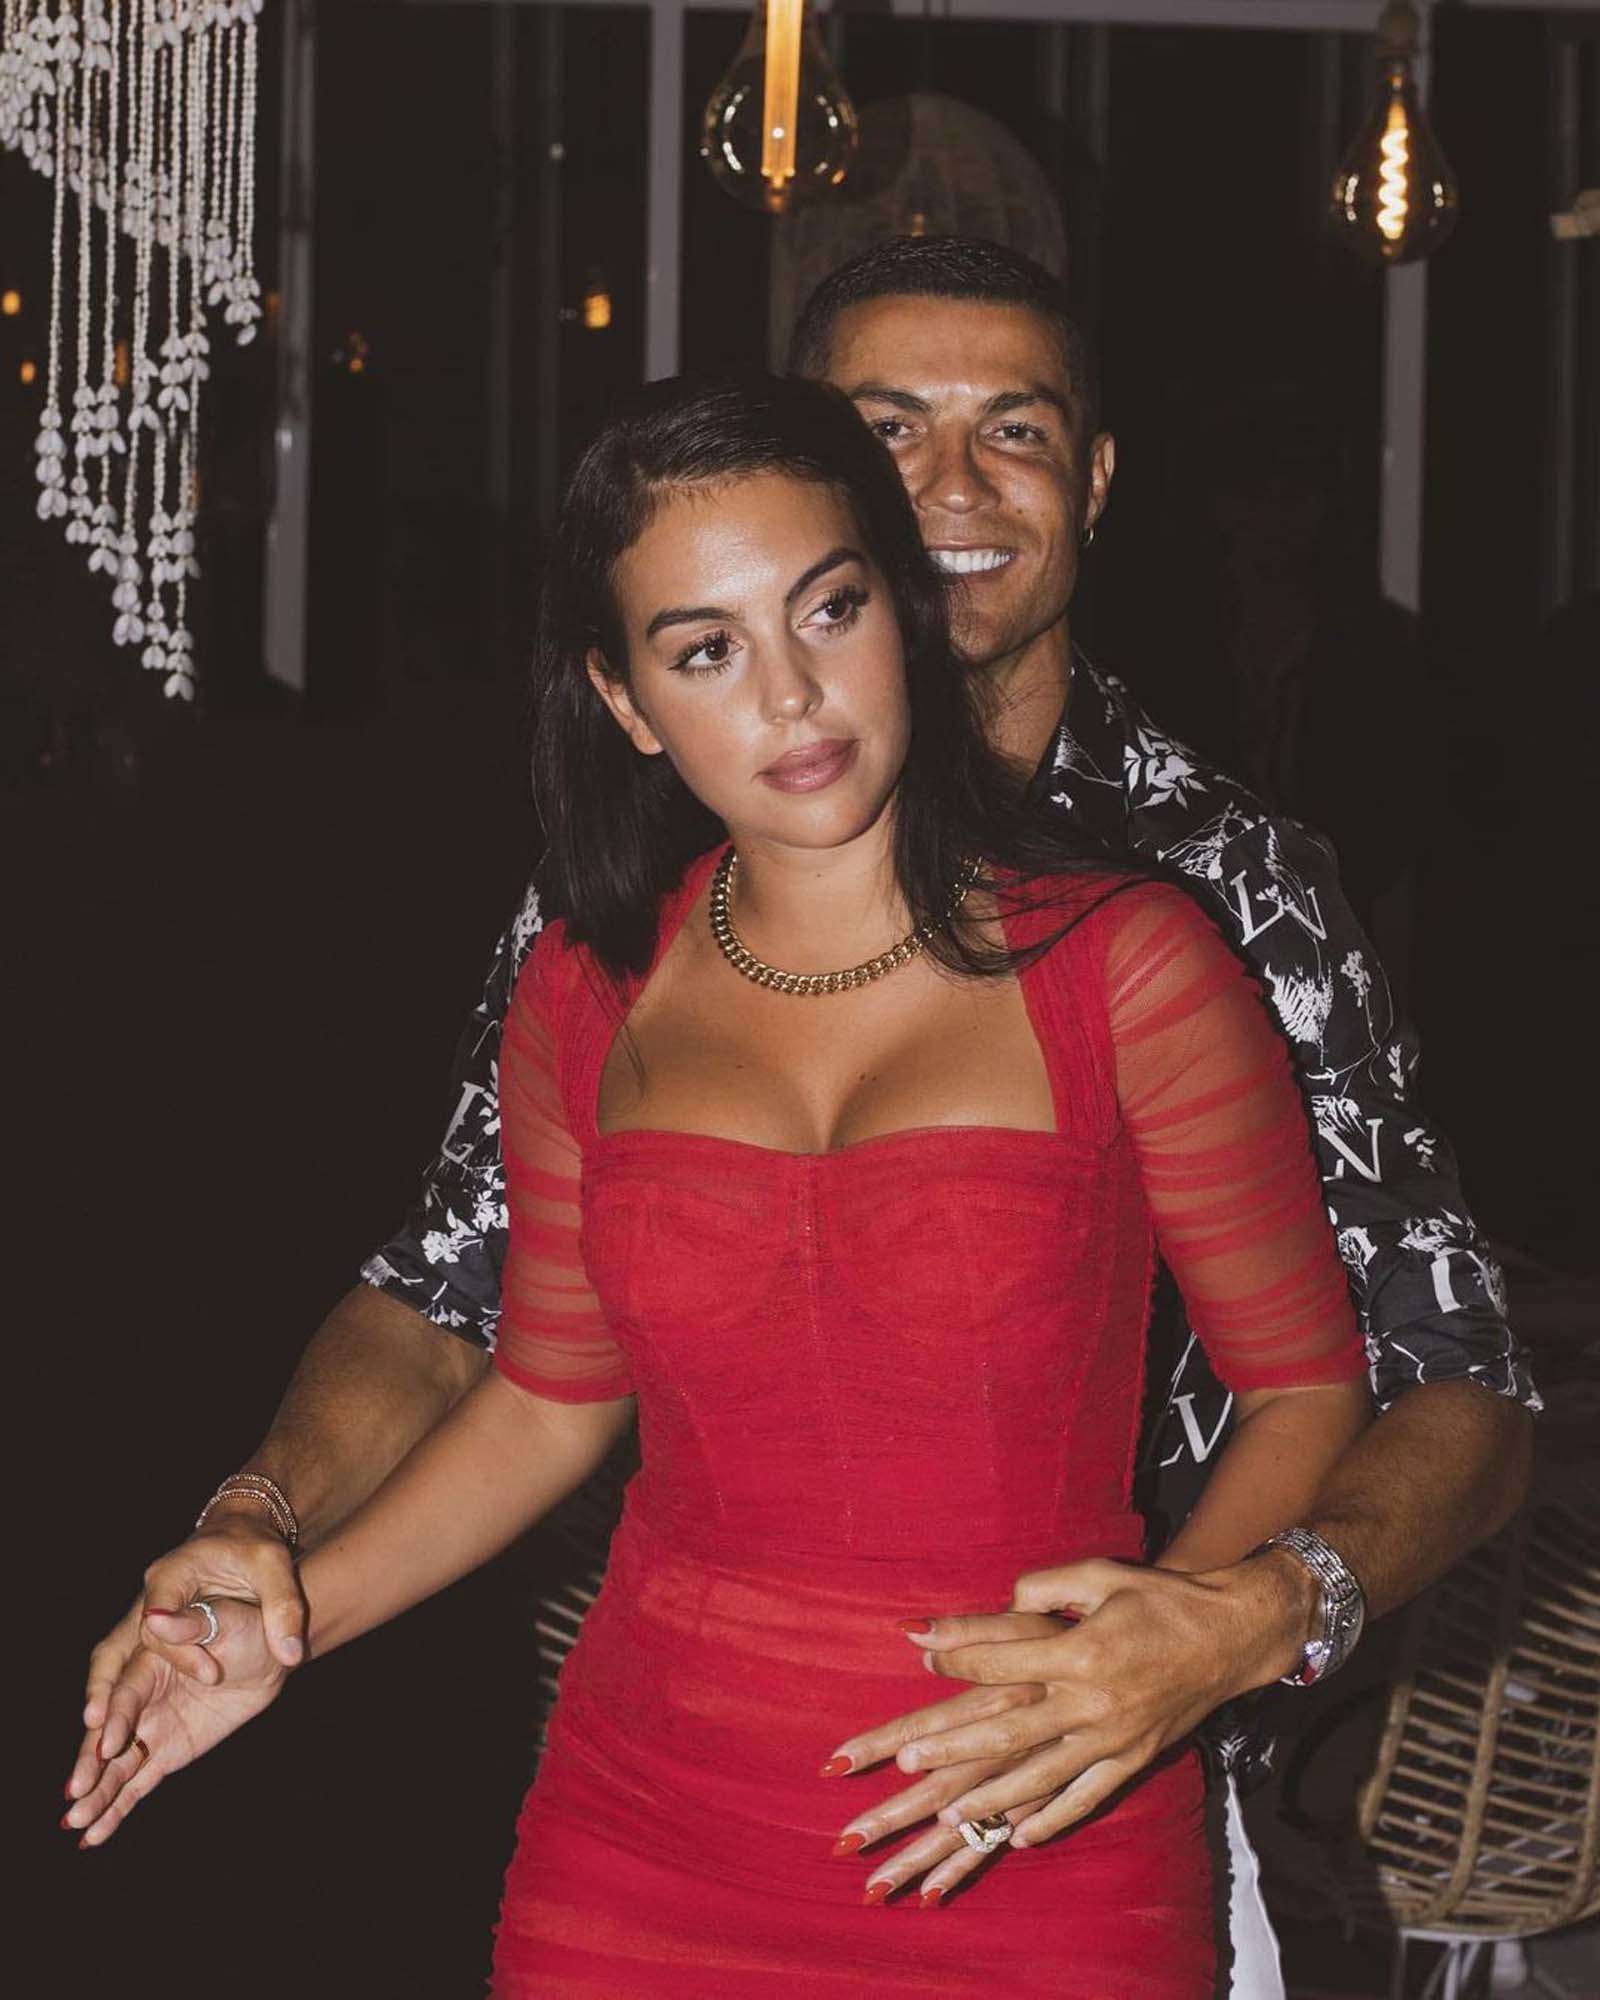 Unmissable pictures of Cristiano Ronaldo's girlfriend Georgina Rodriguez |  Photogallery - ETimes